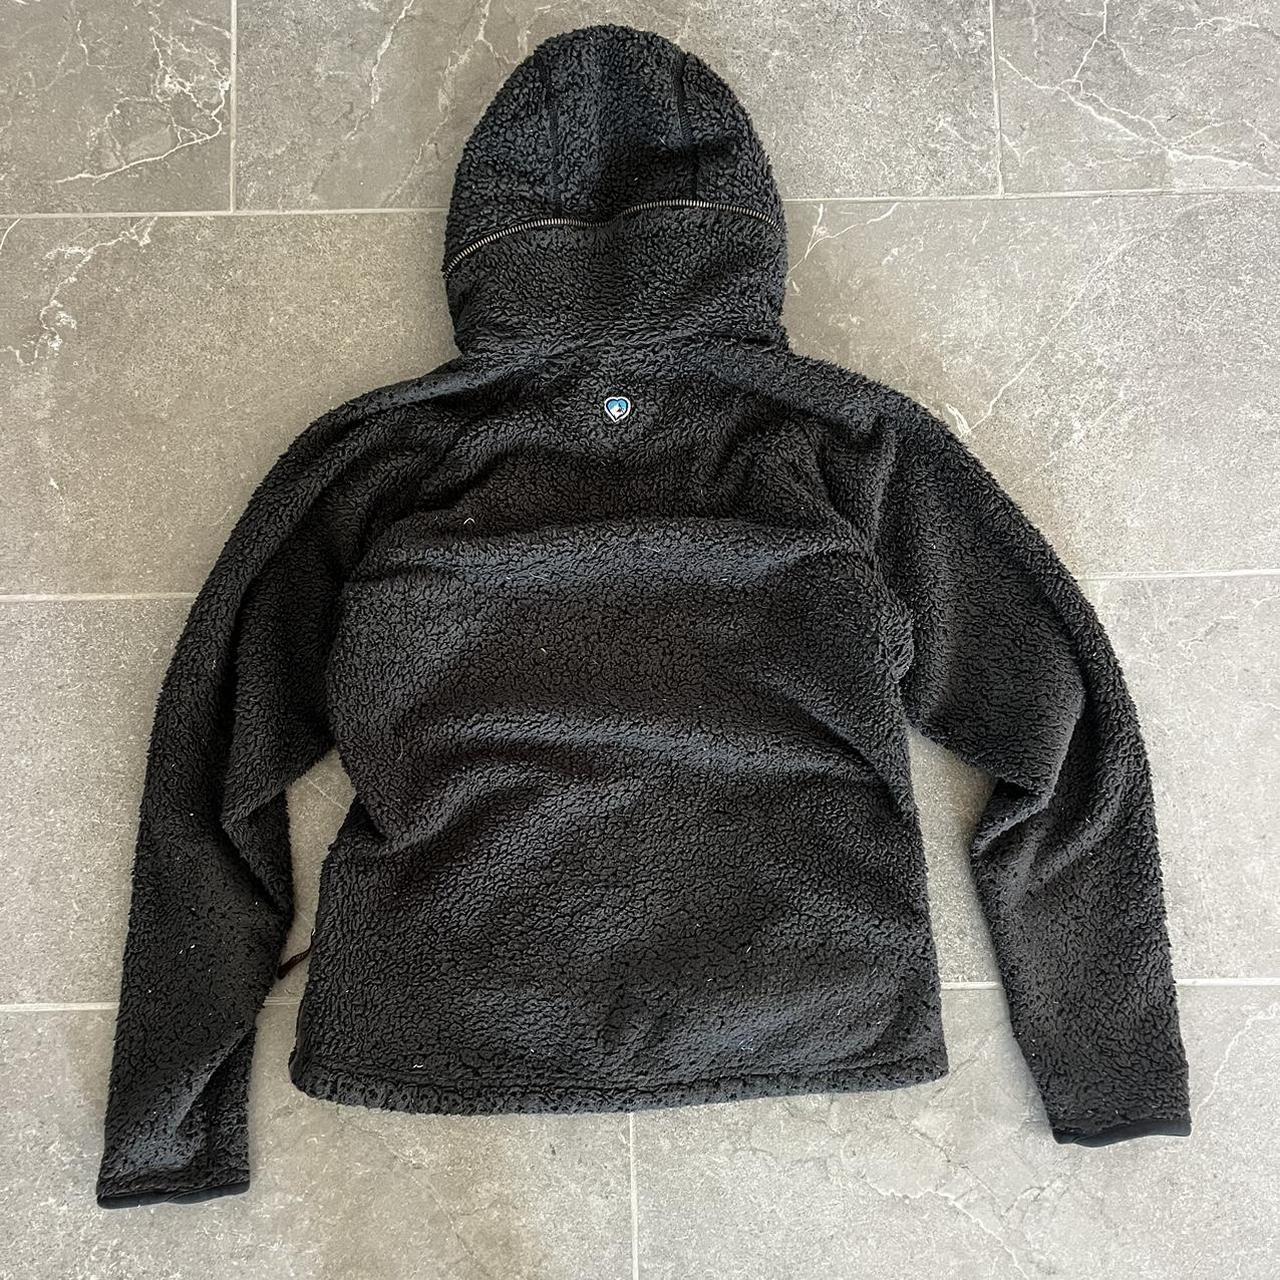 Kuhl sweatshirt hoodie pullover gray women's size - Depop